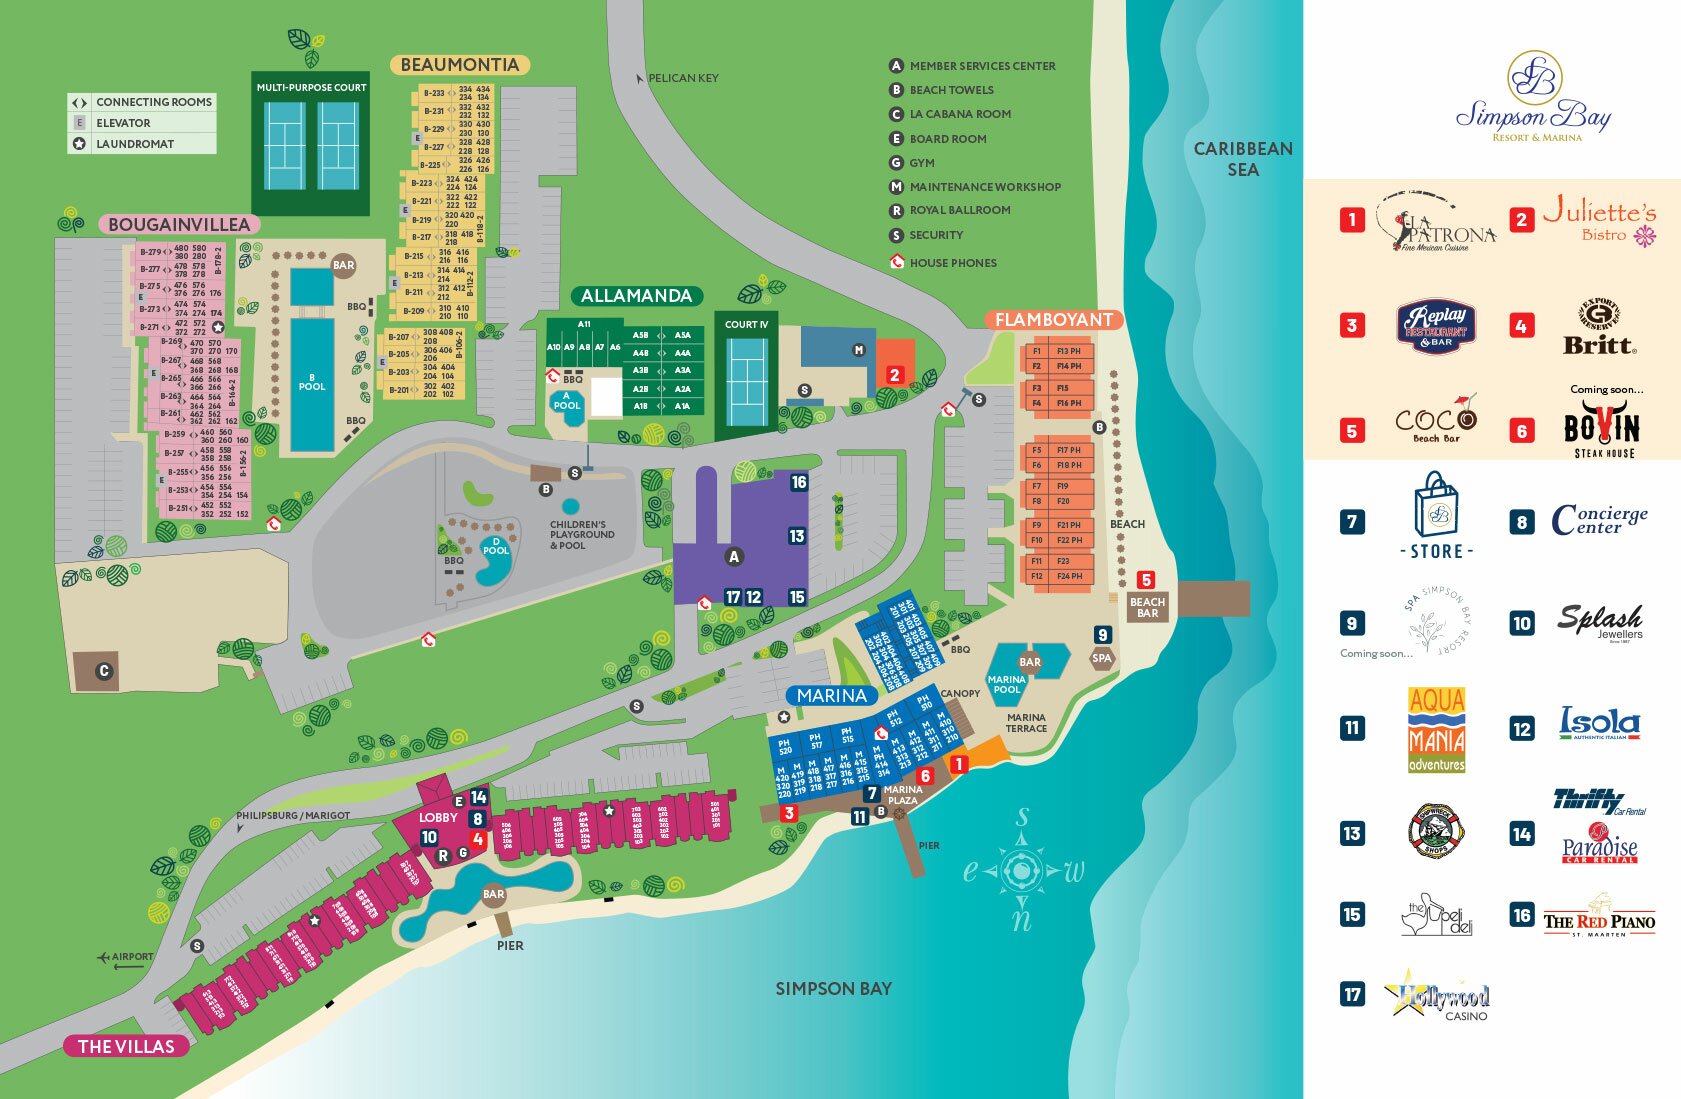 Plan du site de Simpson Bay Resort & Marina